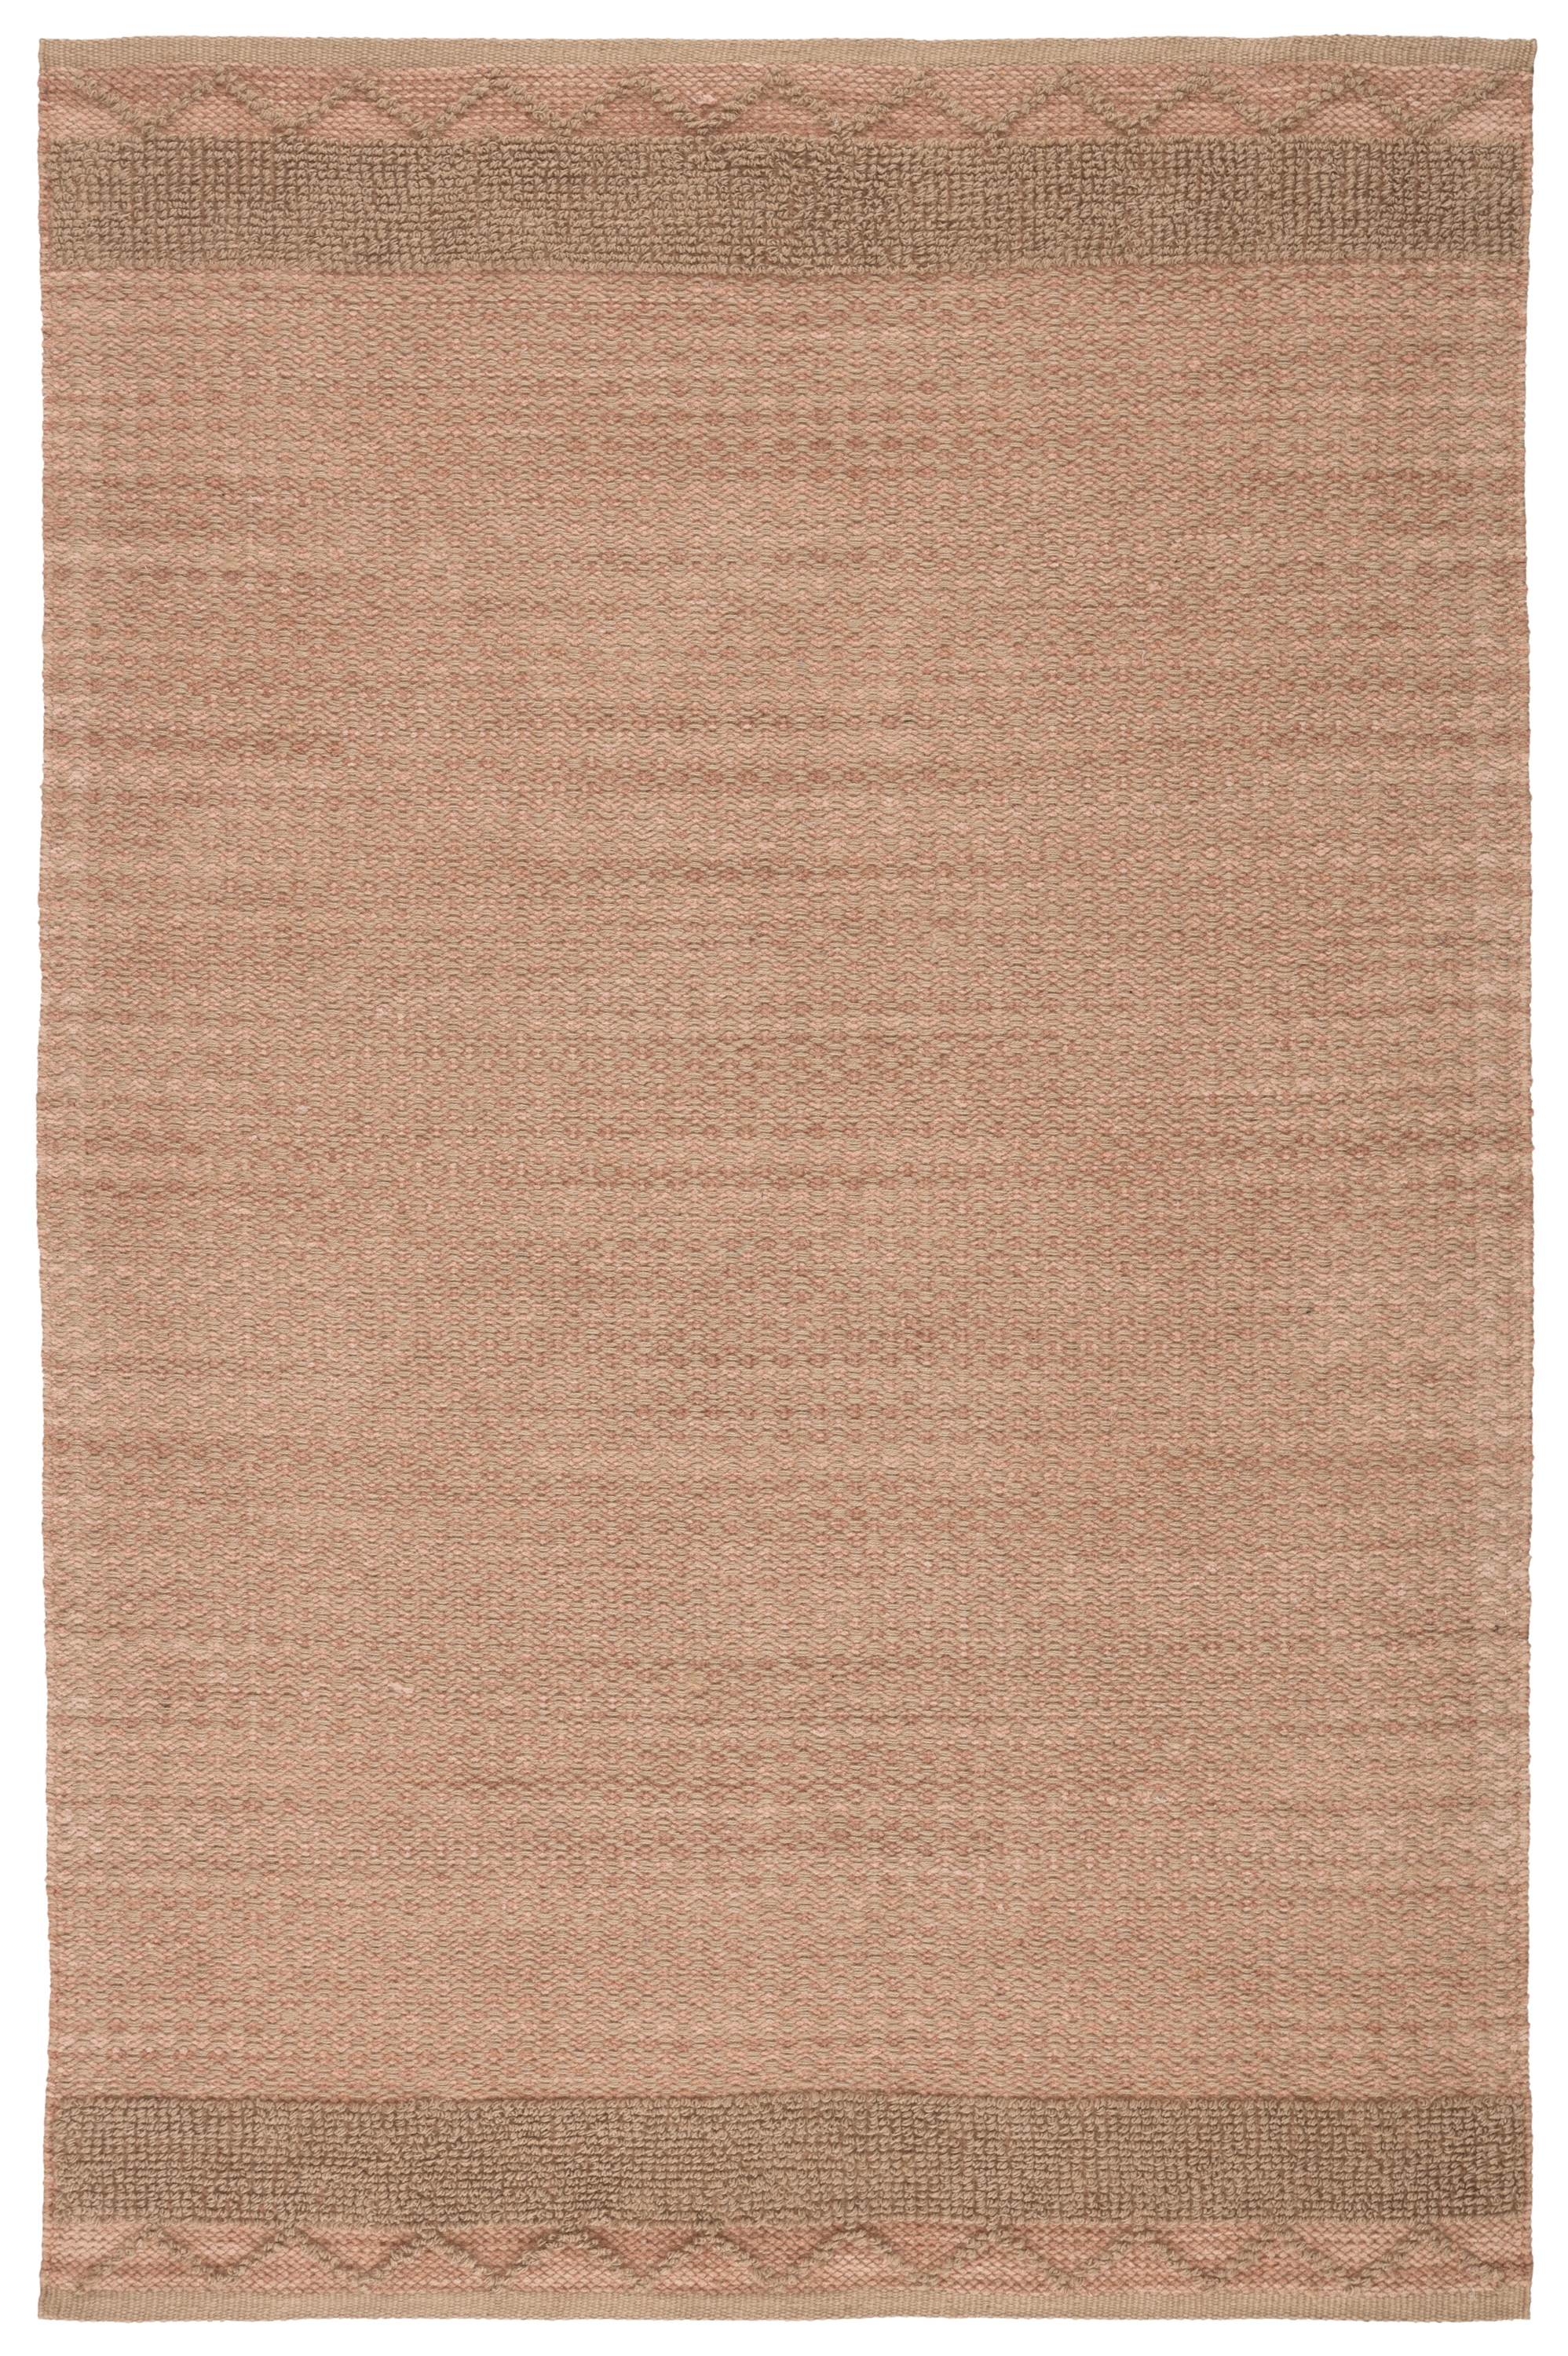 Curran Natural Border Pink/ Tan Area Rug (10'X14') - Image 0